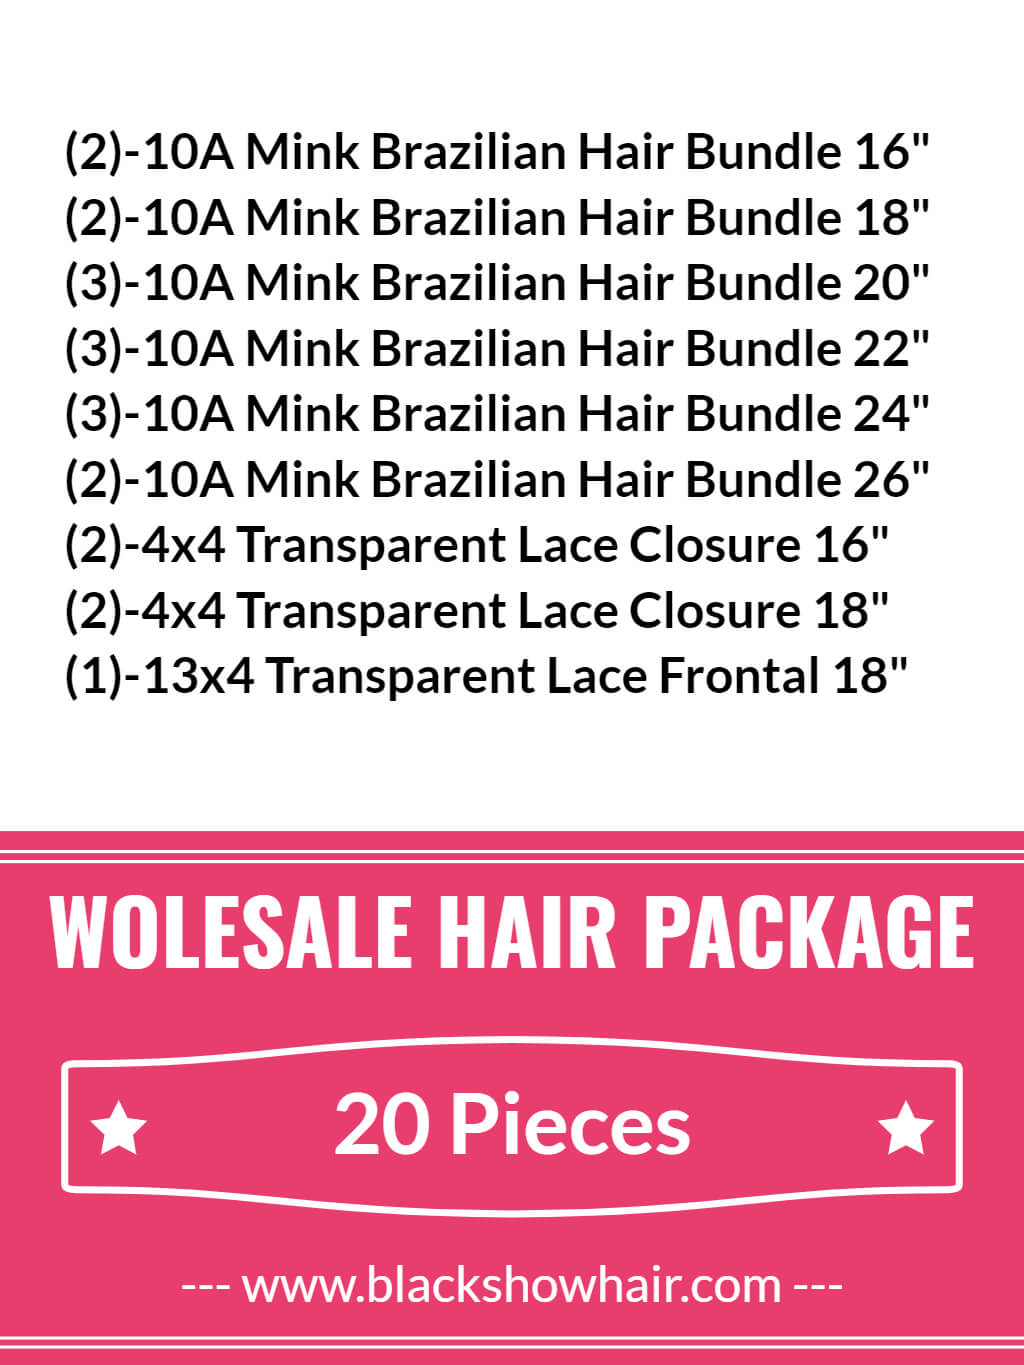 mink brazilian hair wholesale hair bundles bulk 20 pieces